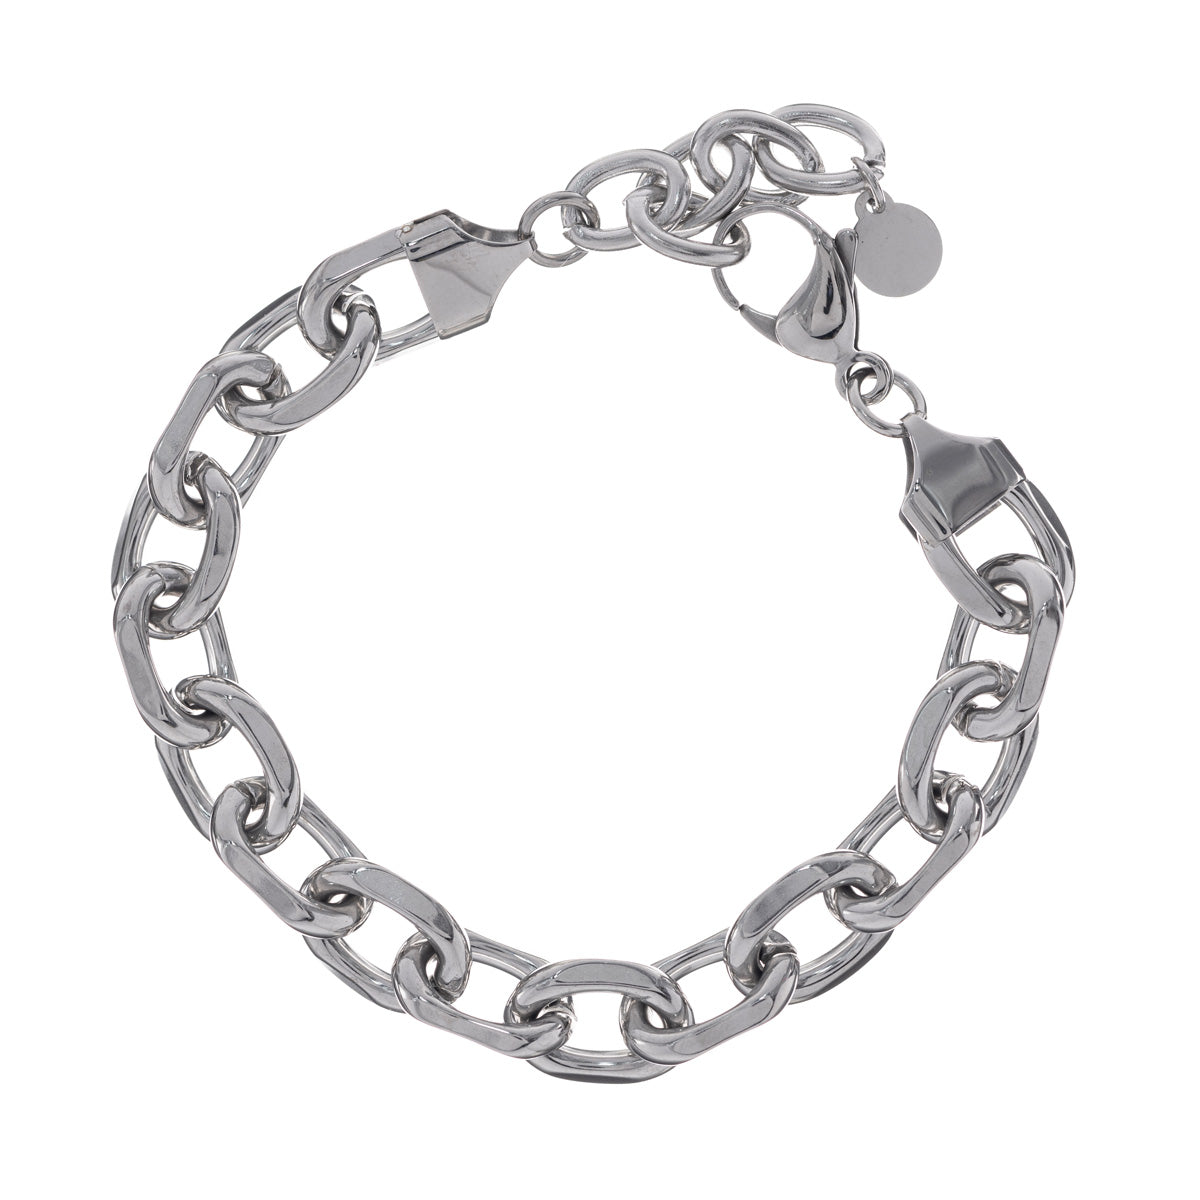 Steel cable chain bracelet 1,1cm wide